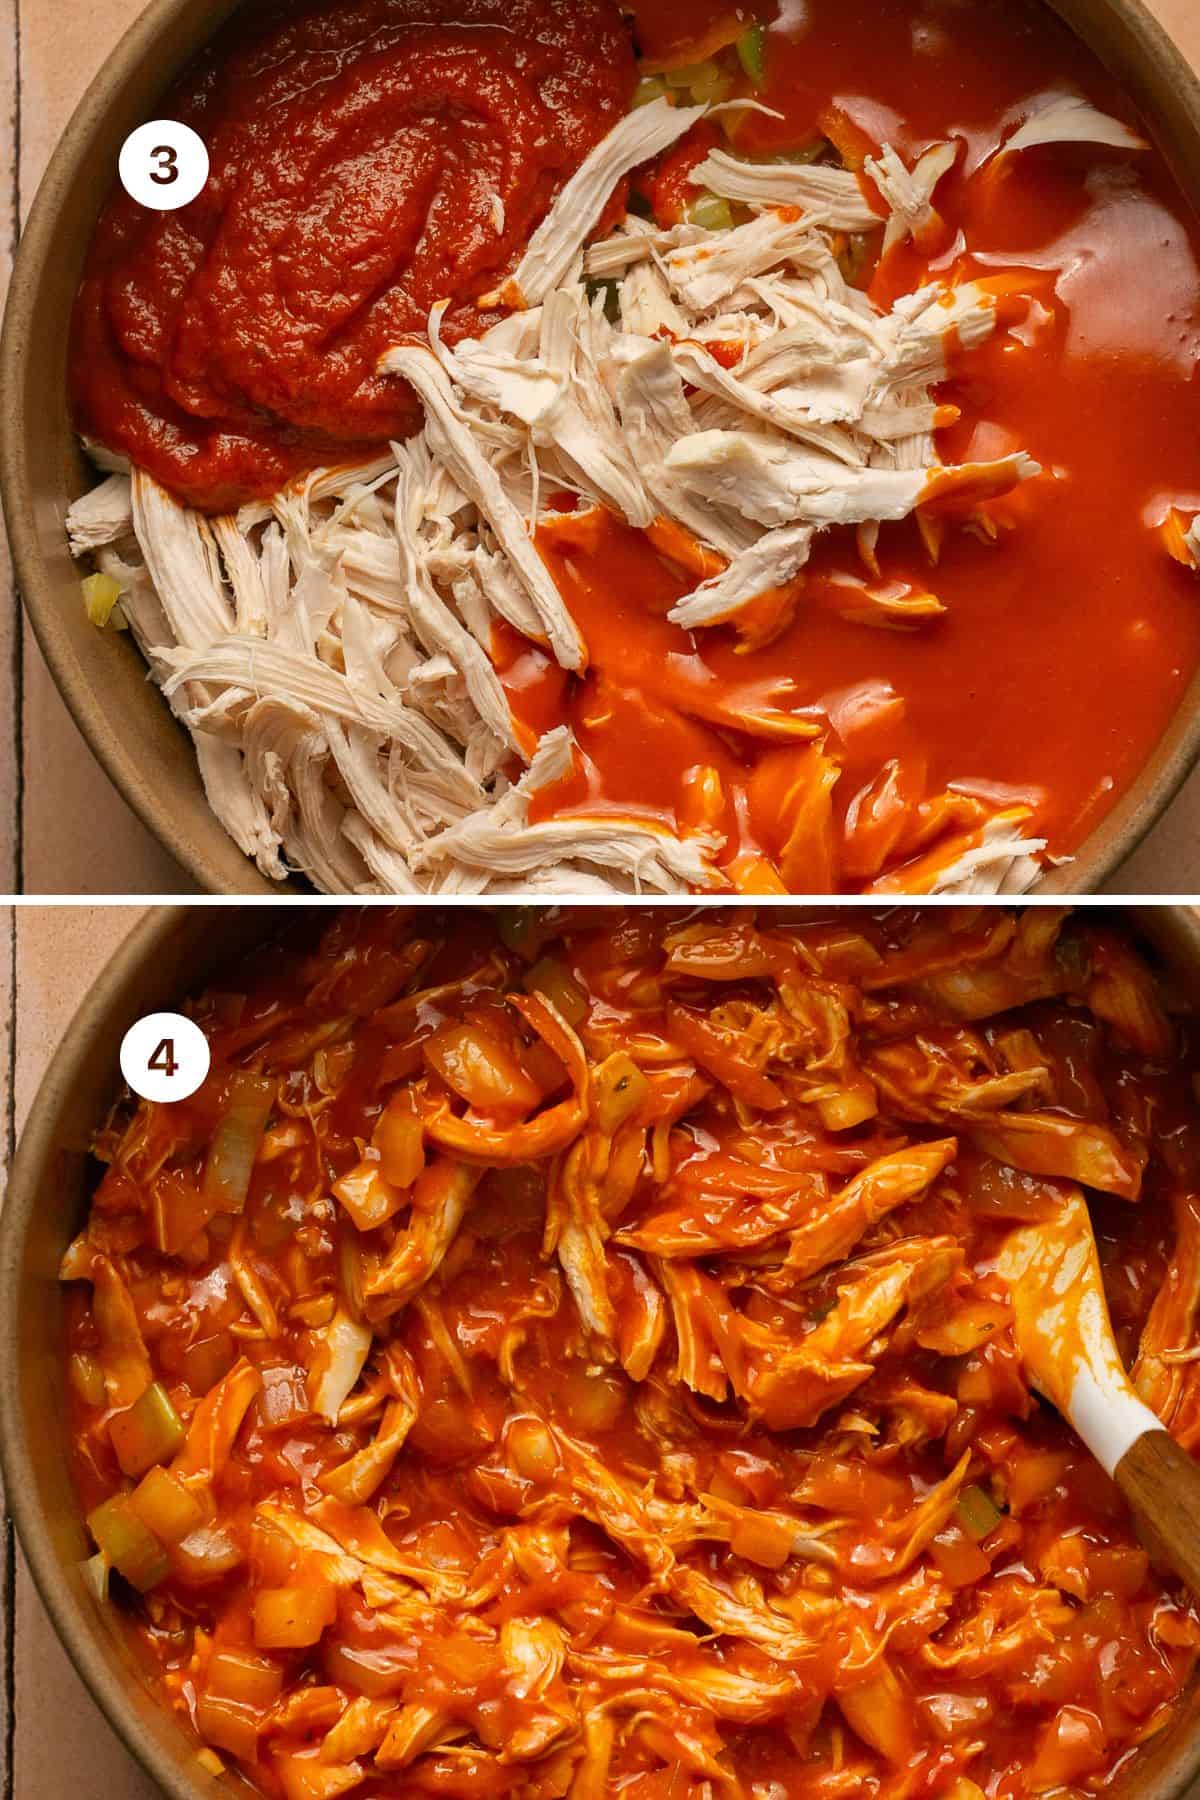 Chicken, marinara sauce, buffalo sauce mixed in a mixing bowl with sauteed vegetables. 